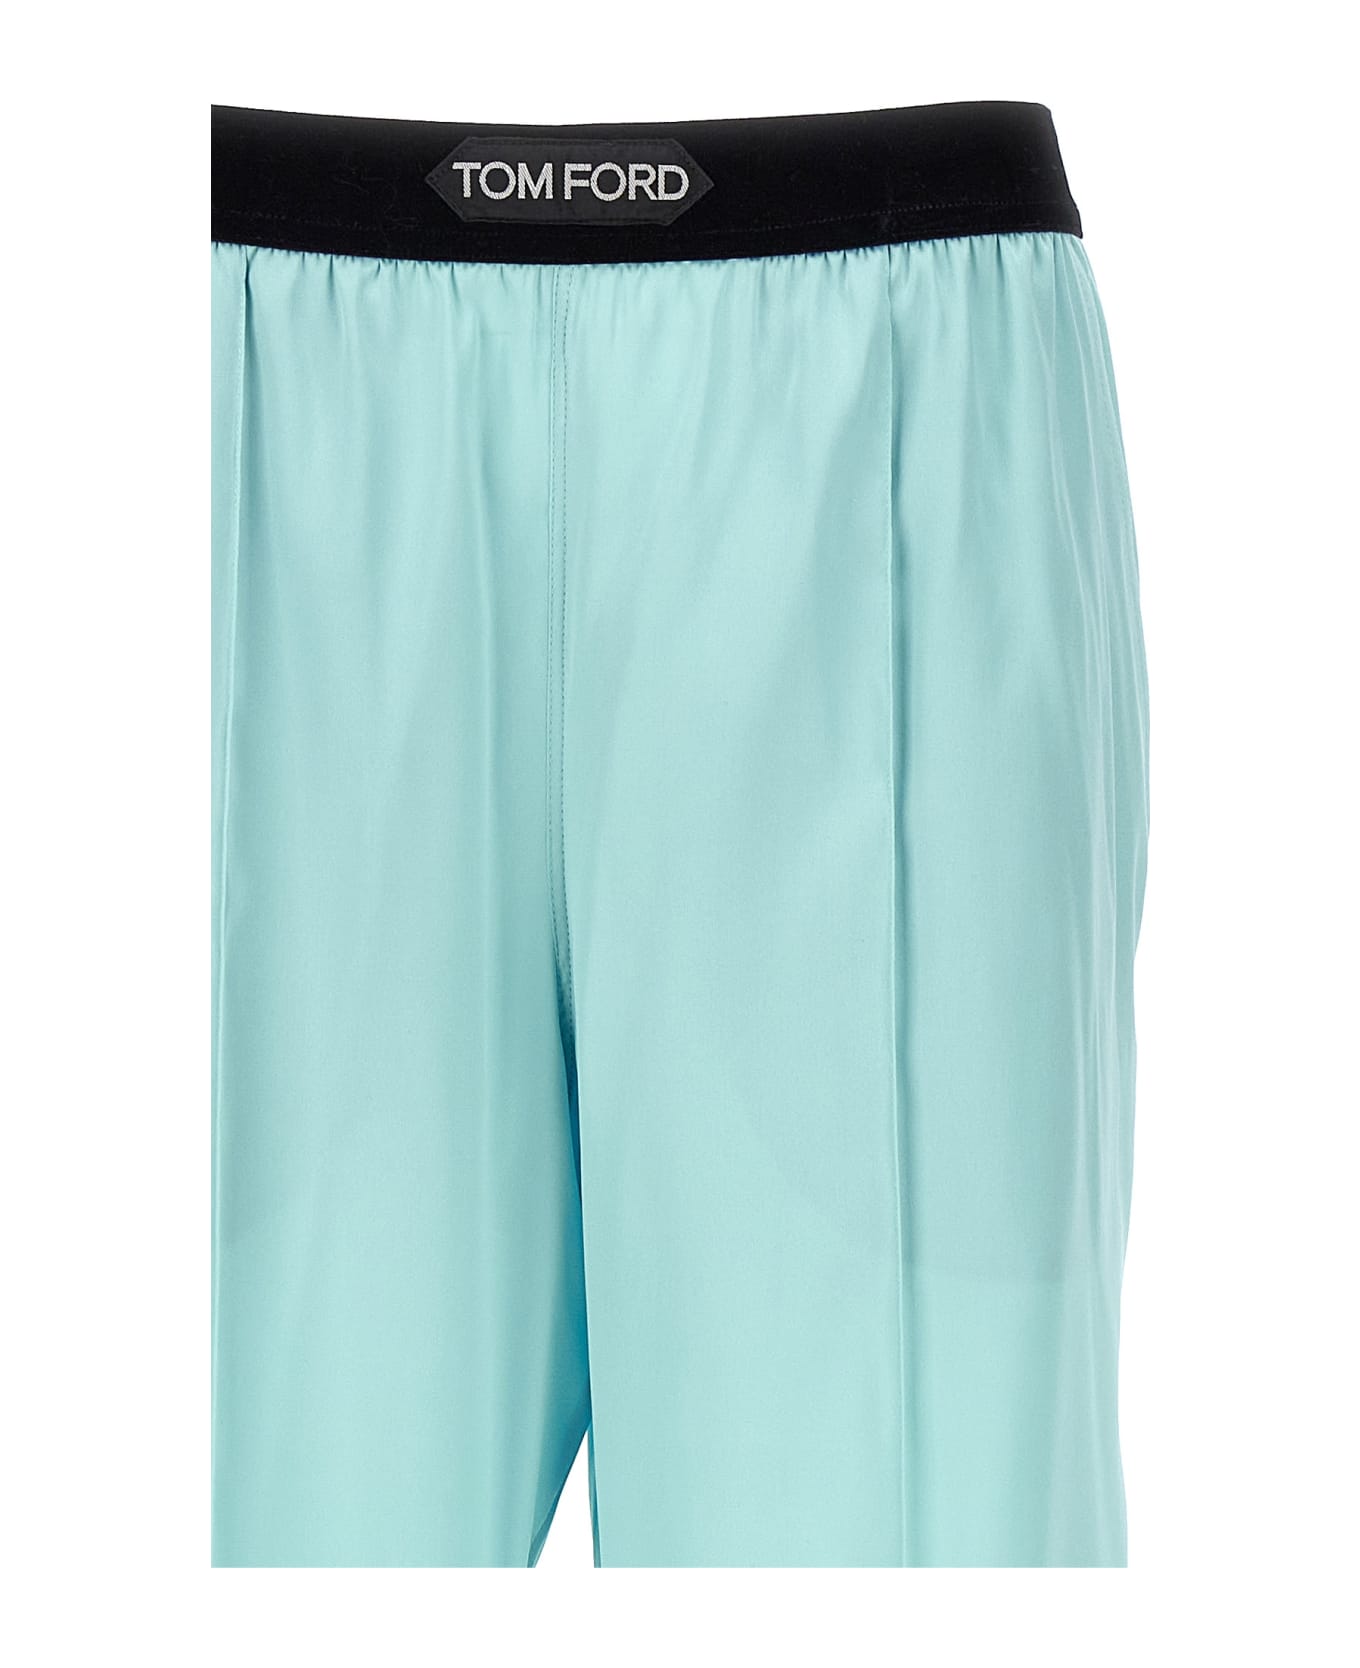 Tom Ford Satin Pants - Light Blue